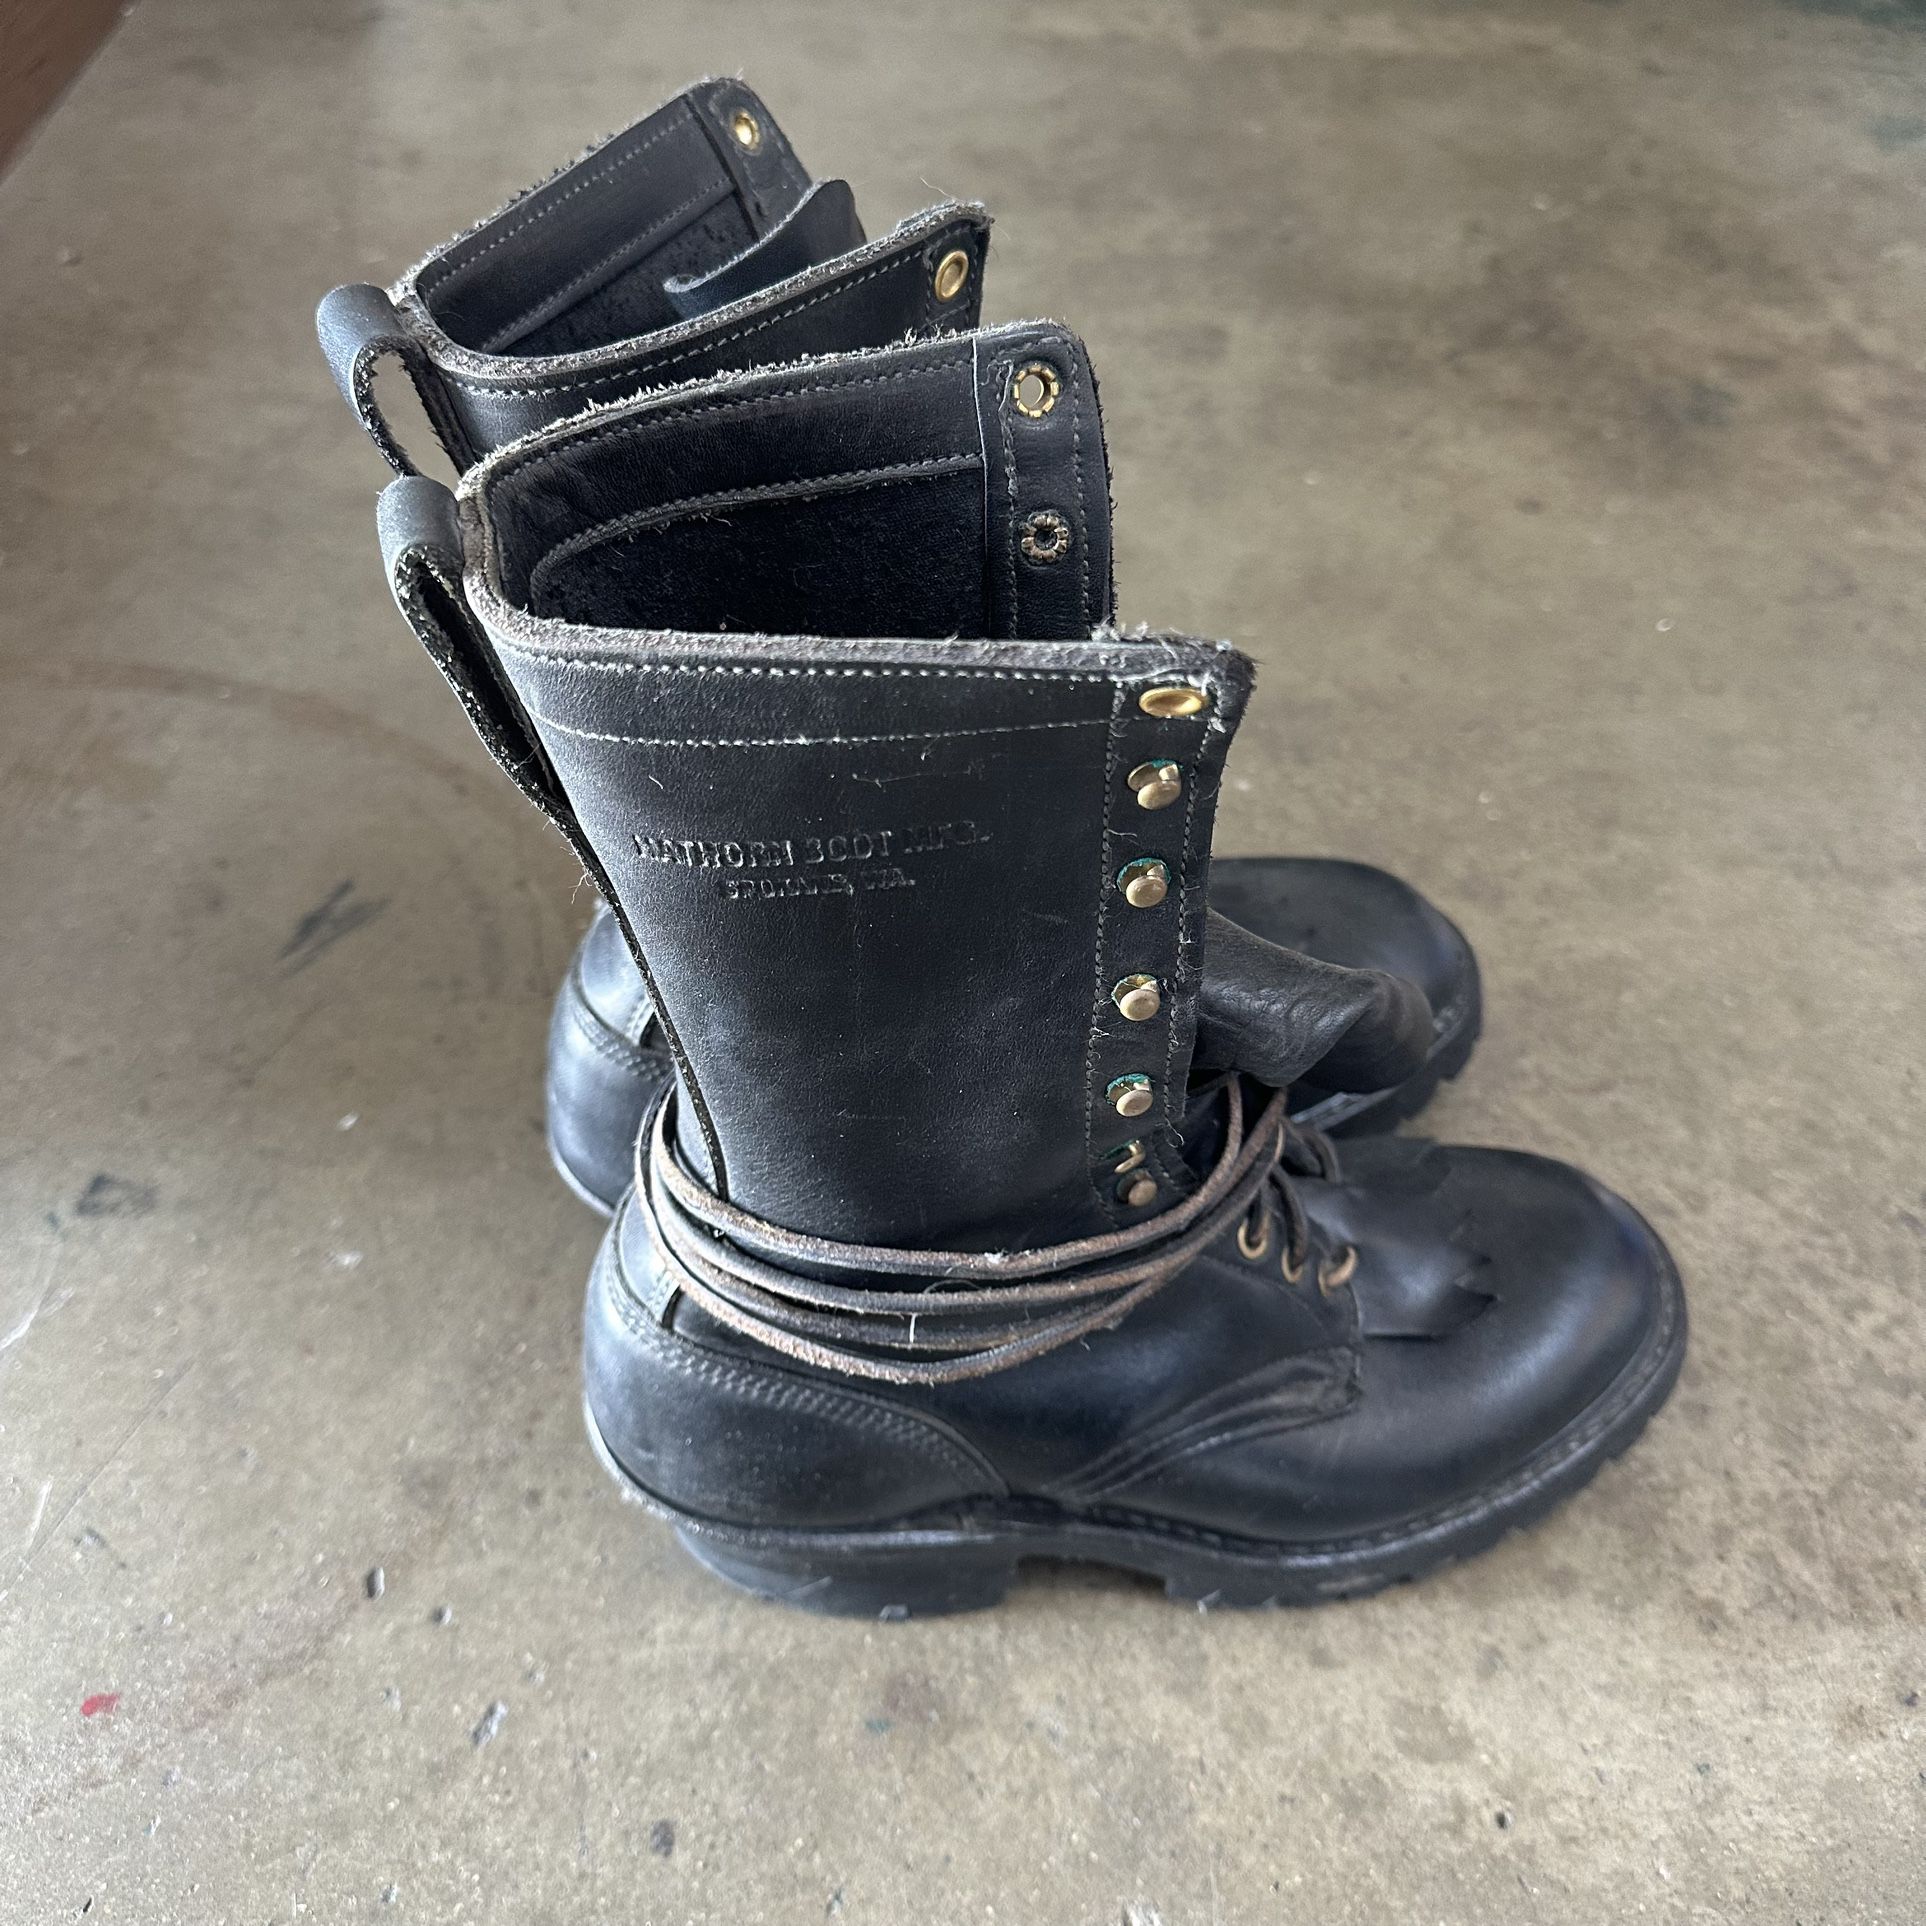 Vintage Hawthorn Boots - size 7 